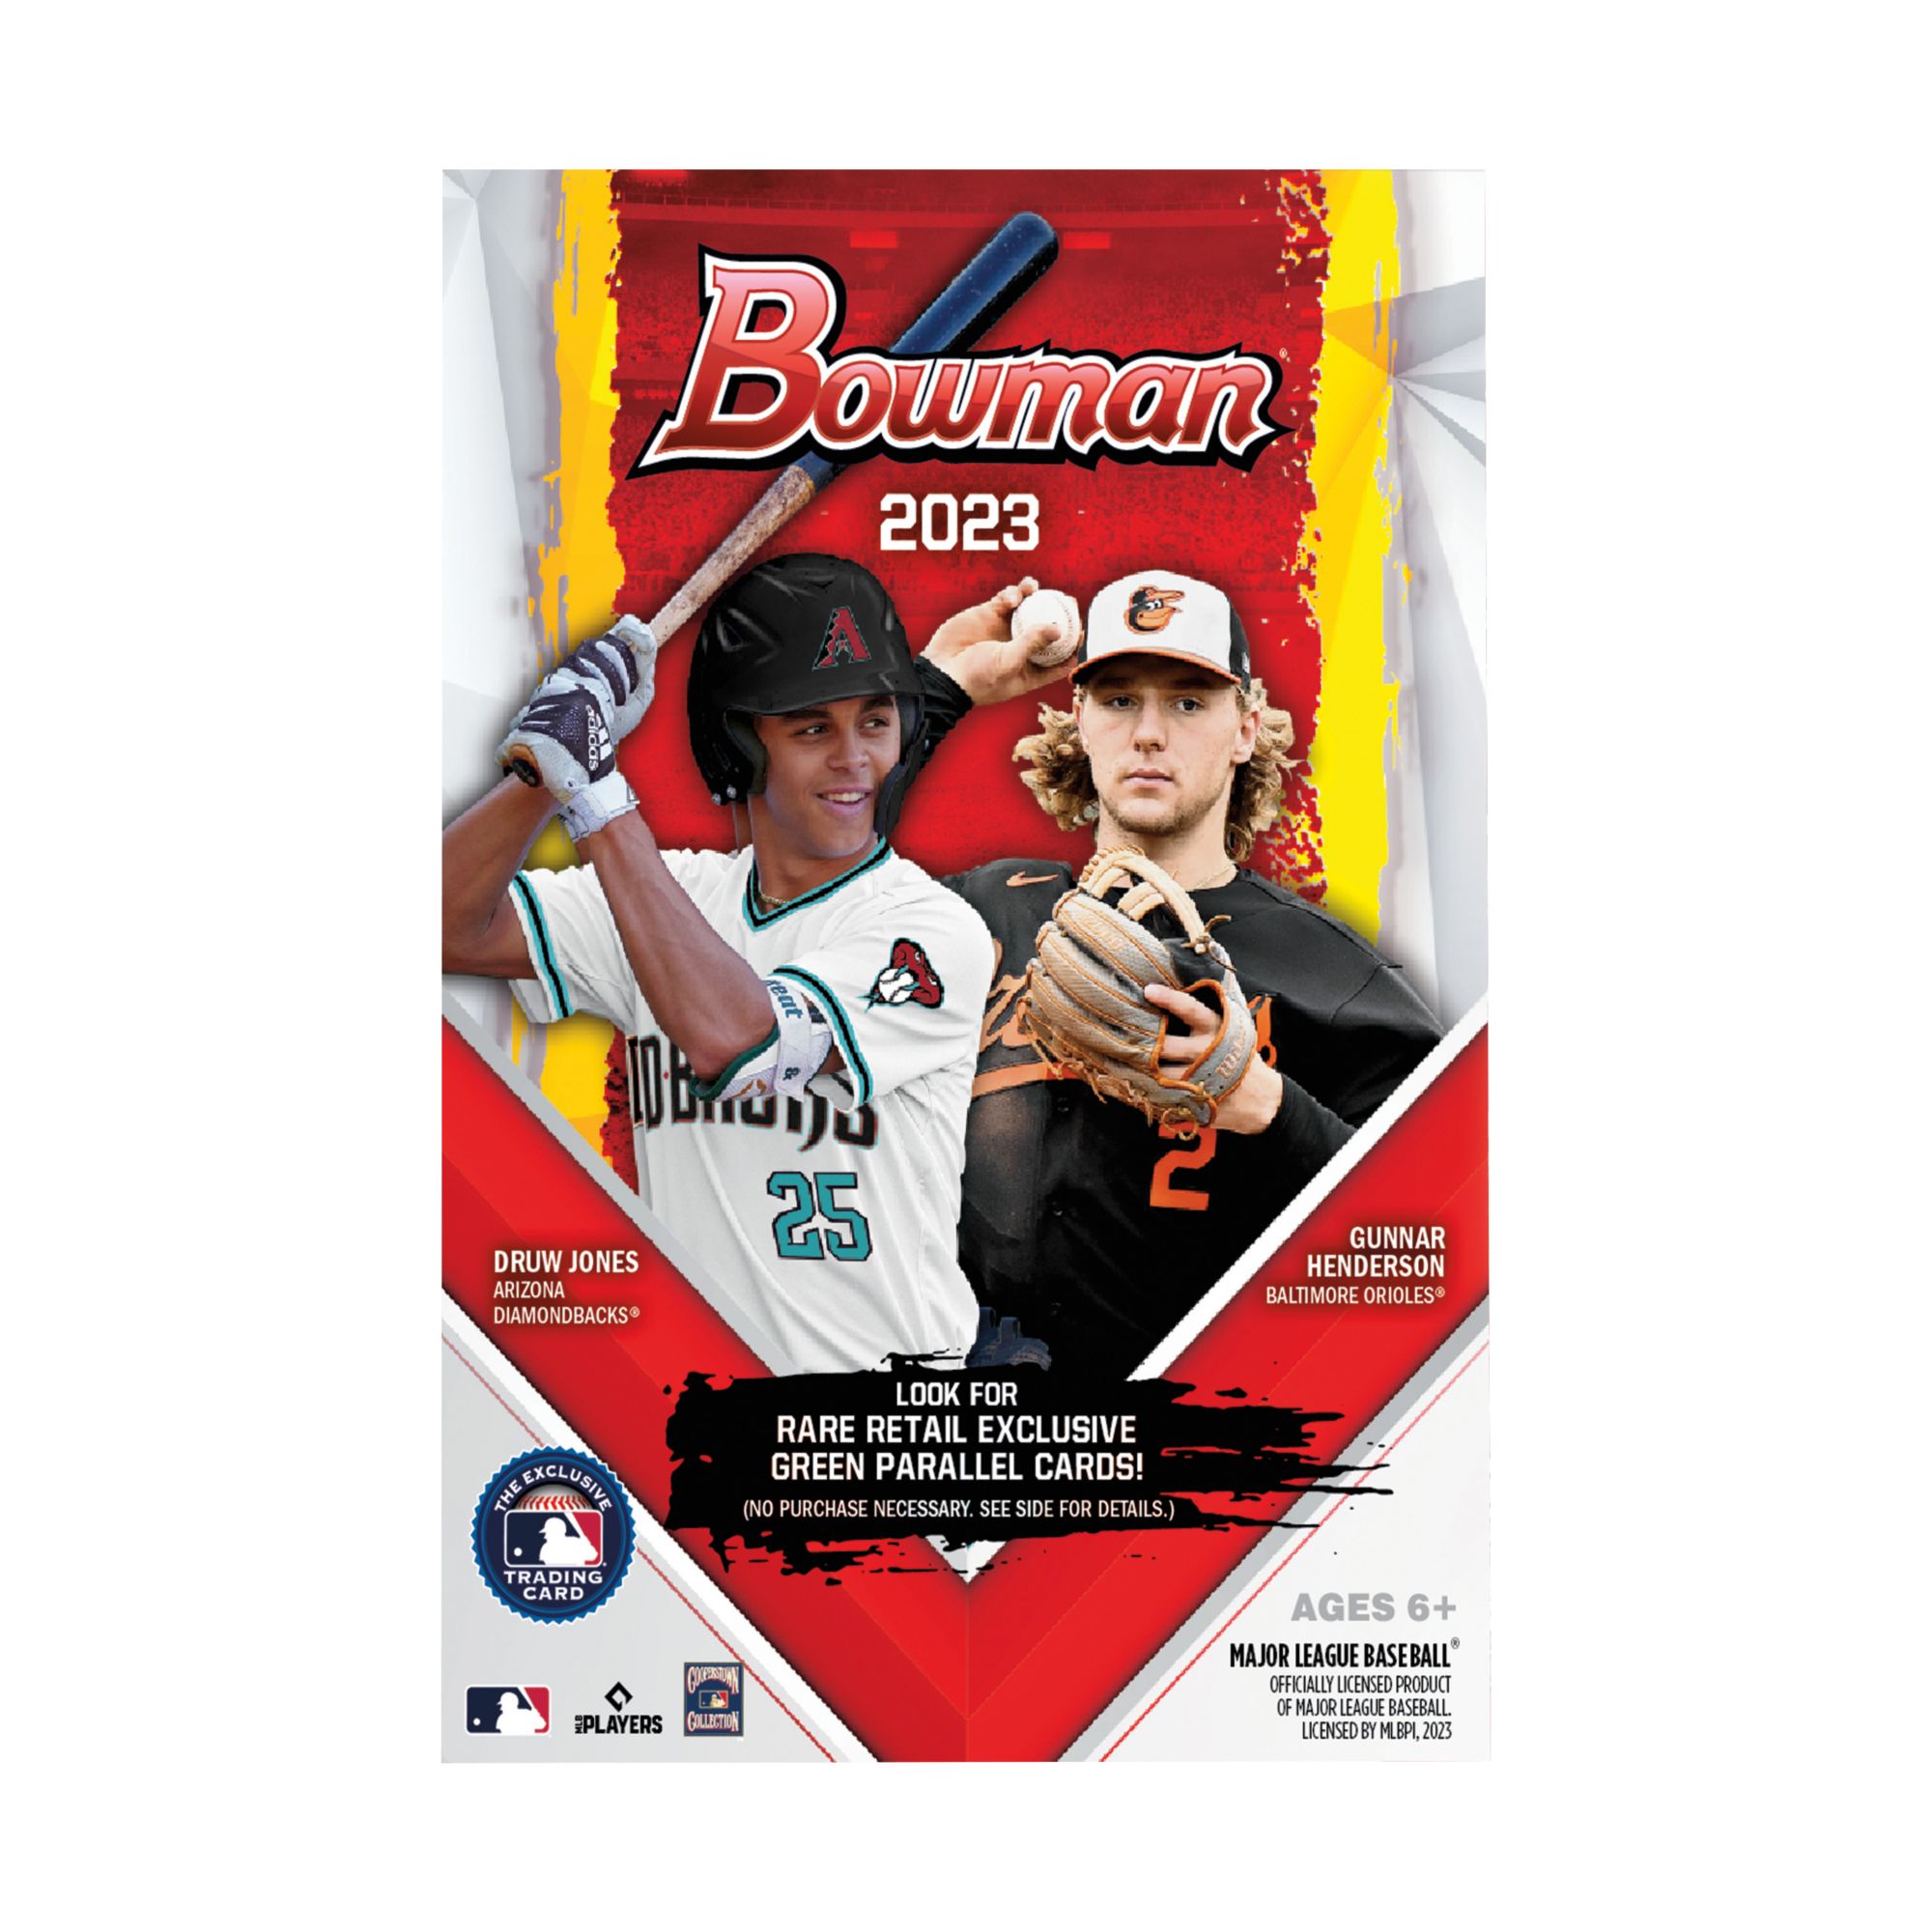 2023 Bowman's Best Baseball Checklist, Team Set Details, Boxes